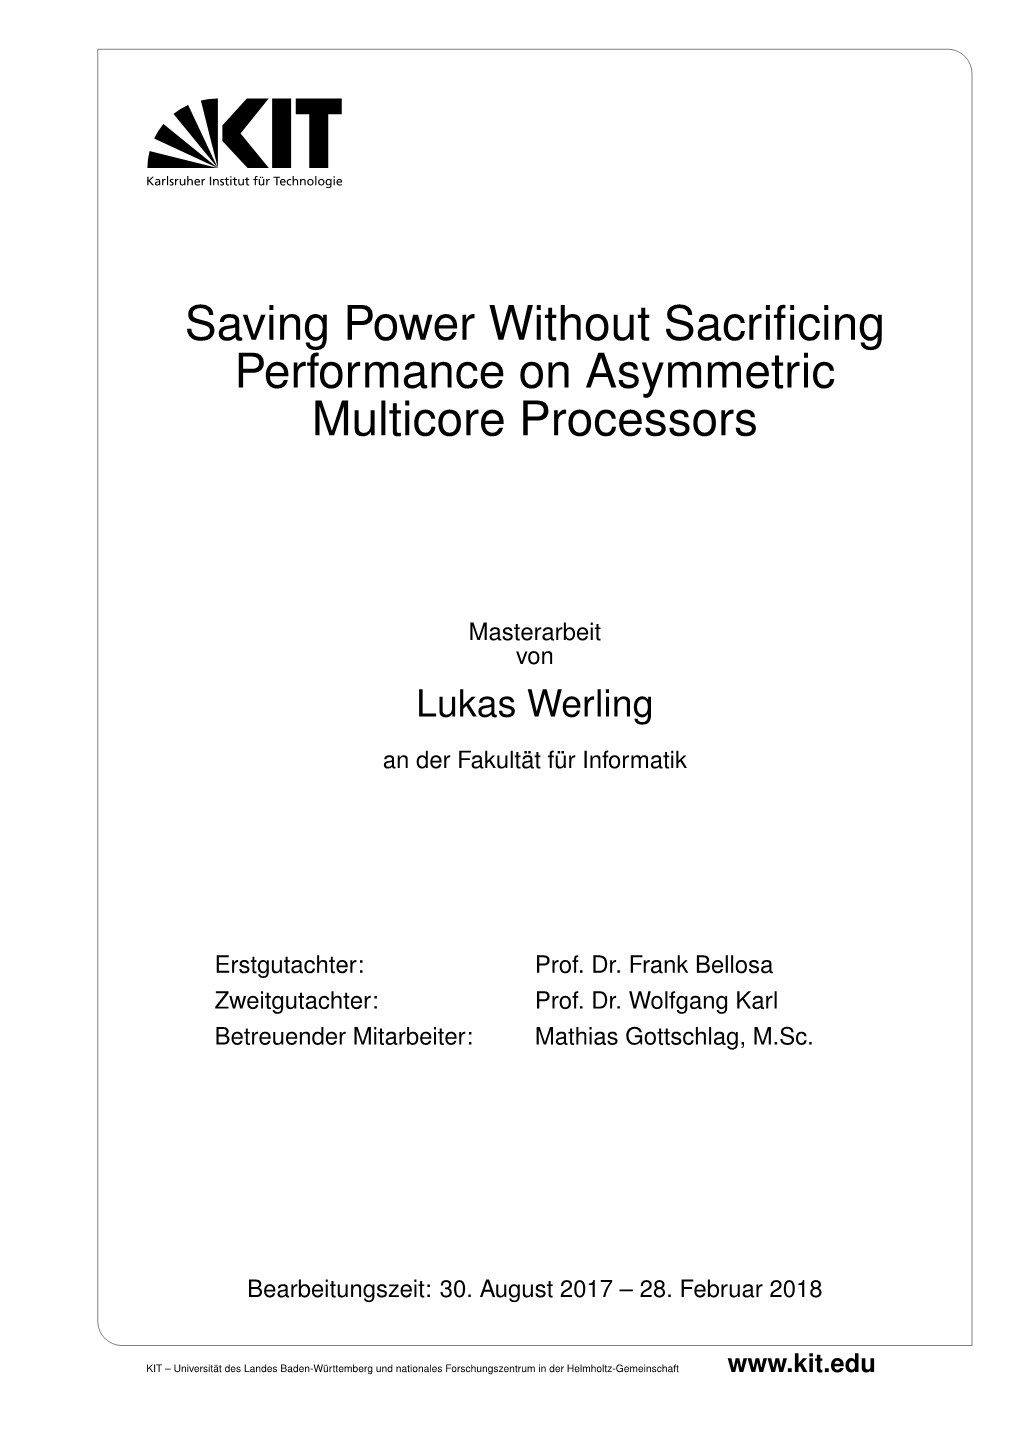 Saving Power Without Sacrificing Performance on Asymmetric